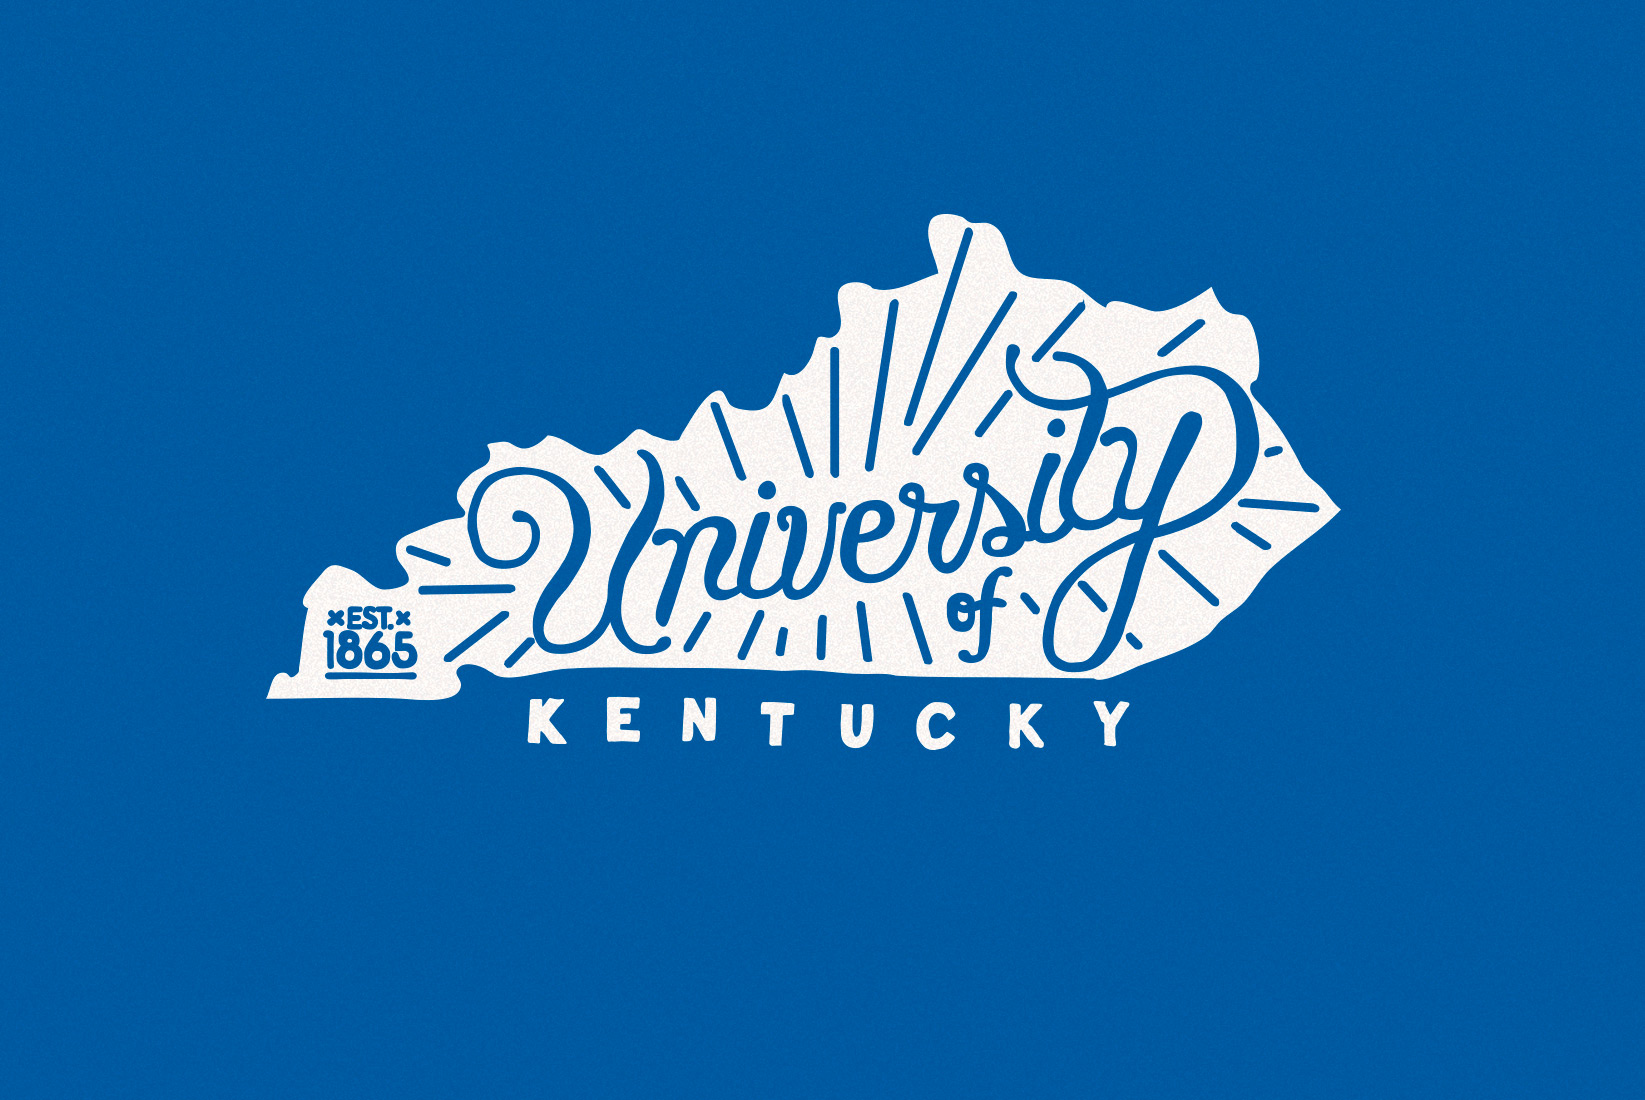 See Blue - University of Kentucky